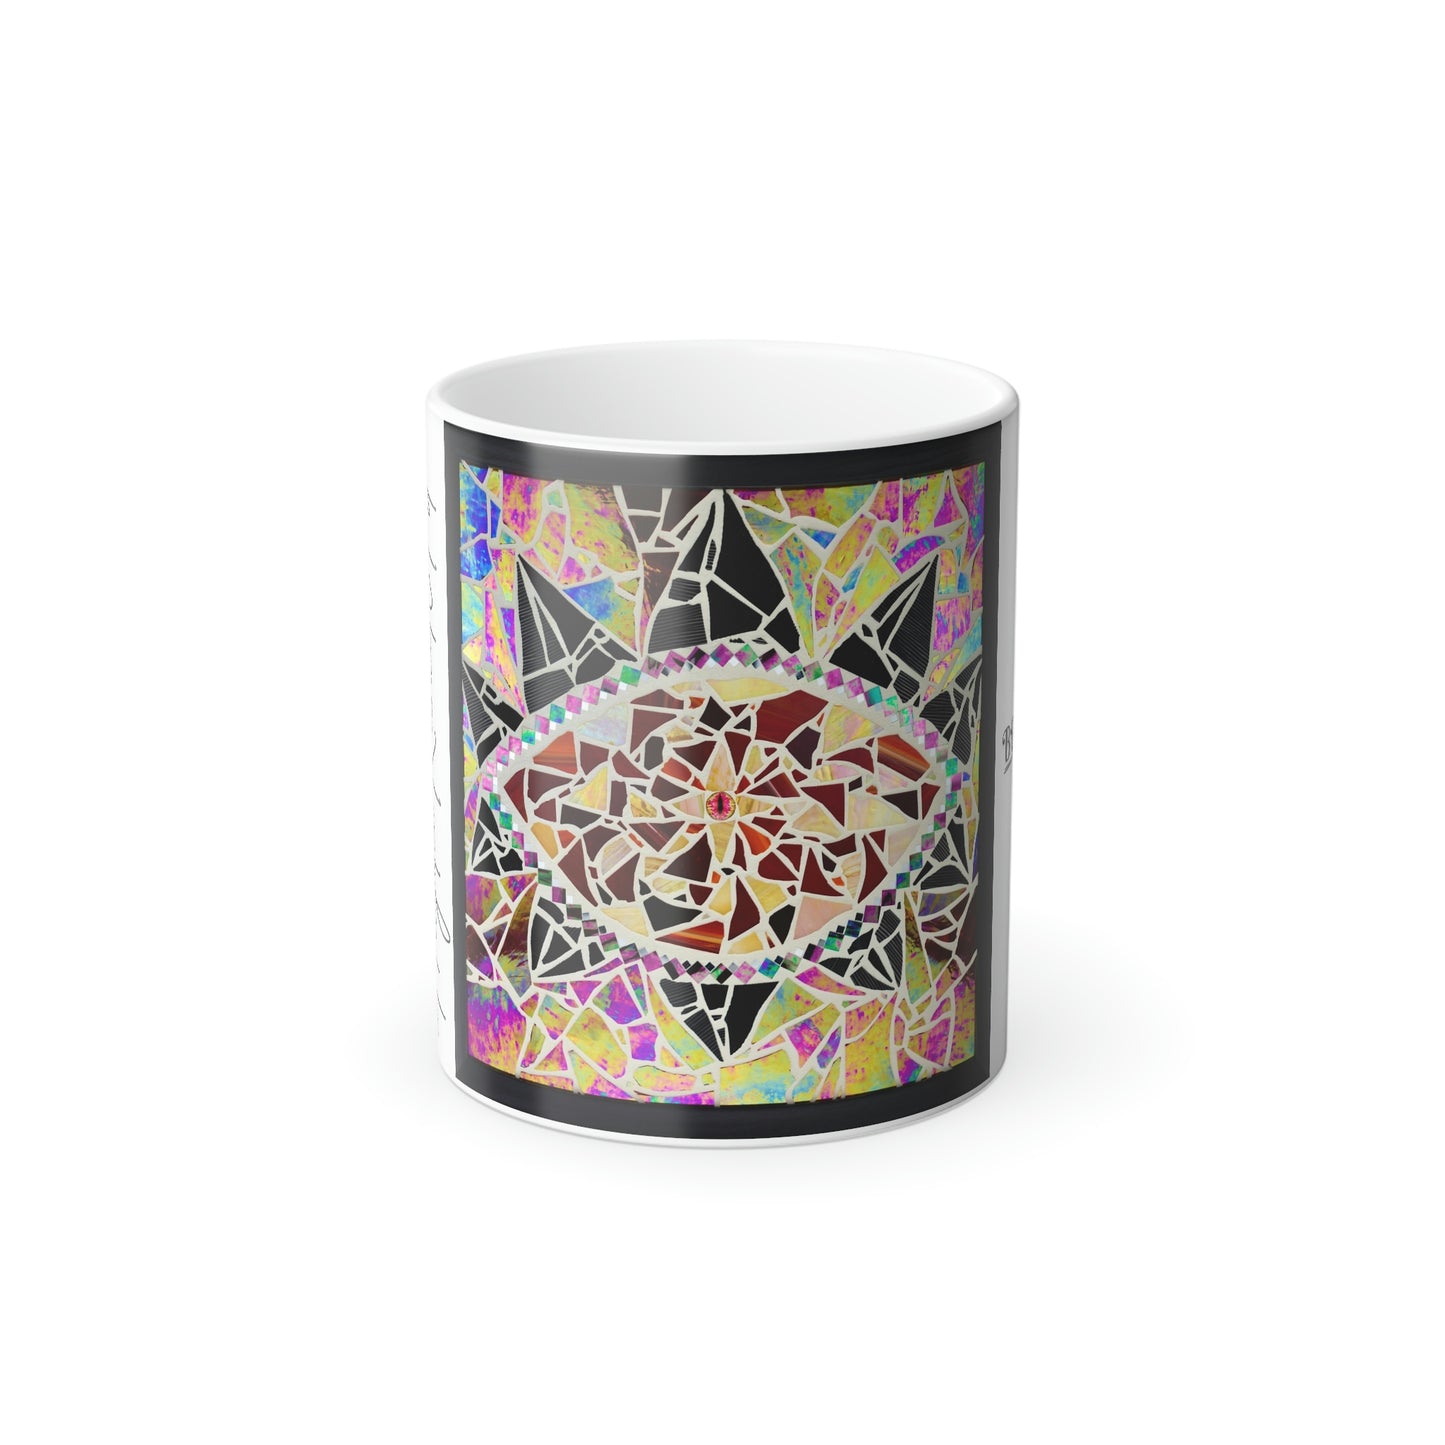 Red Glass Mosaic Dragon Eye Art BElieve In Magic Color Morphing Ceramic Coffee Tea Mug, 11oz